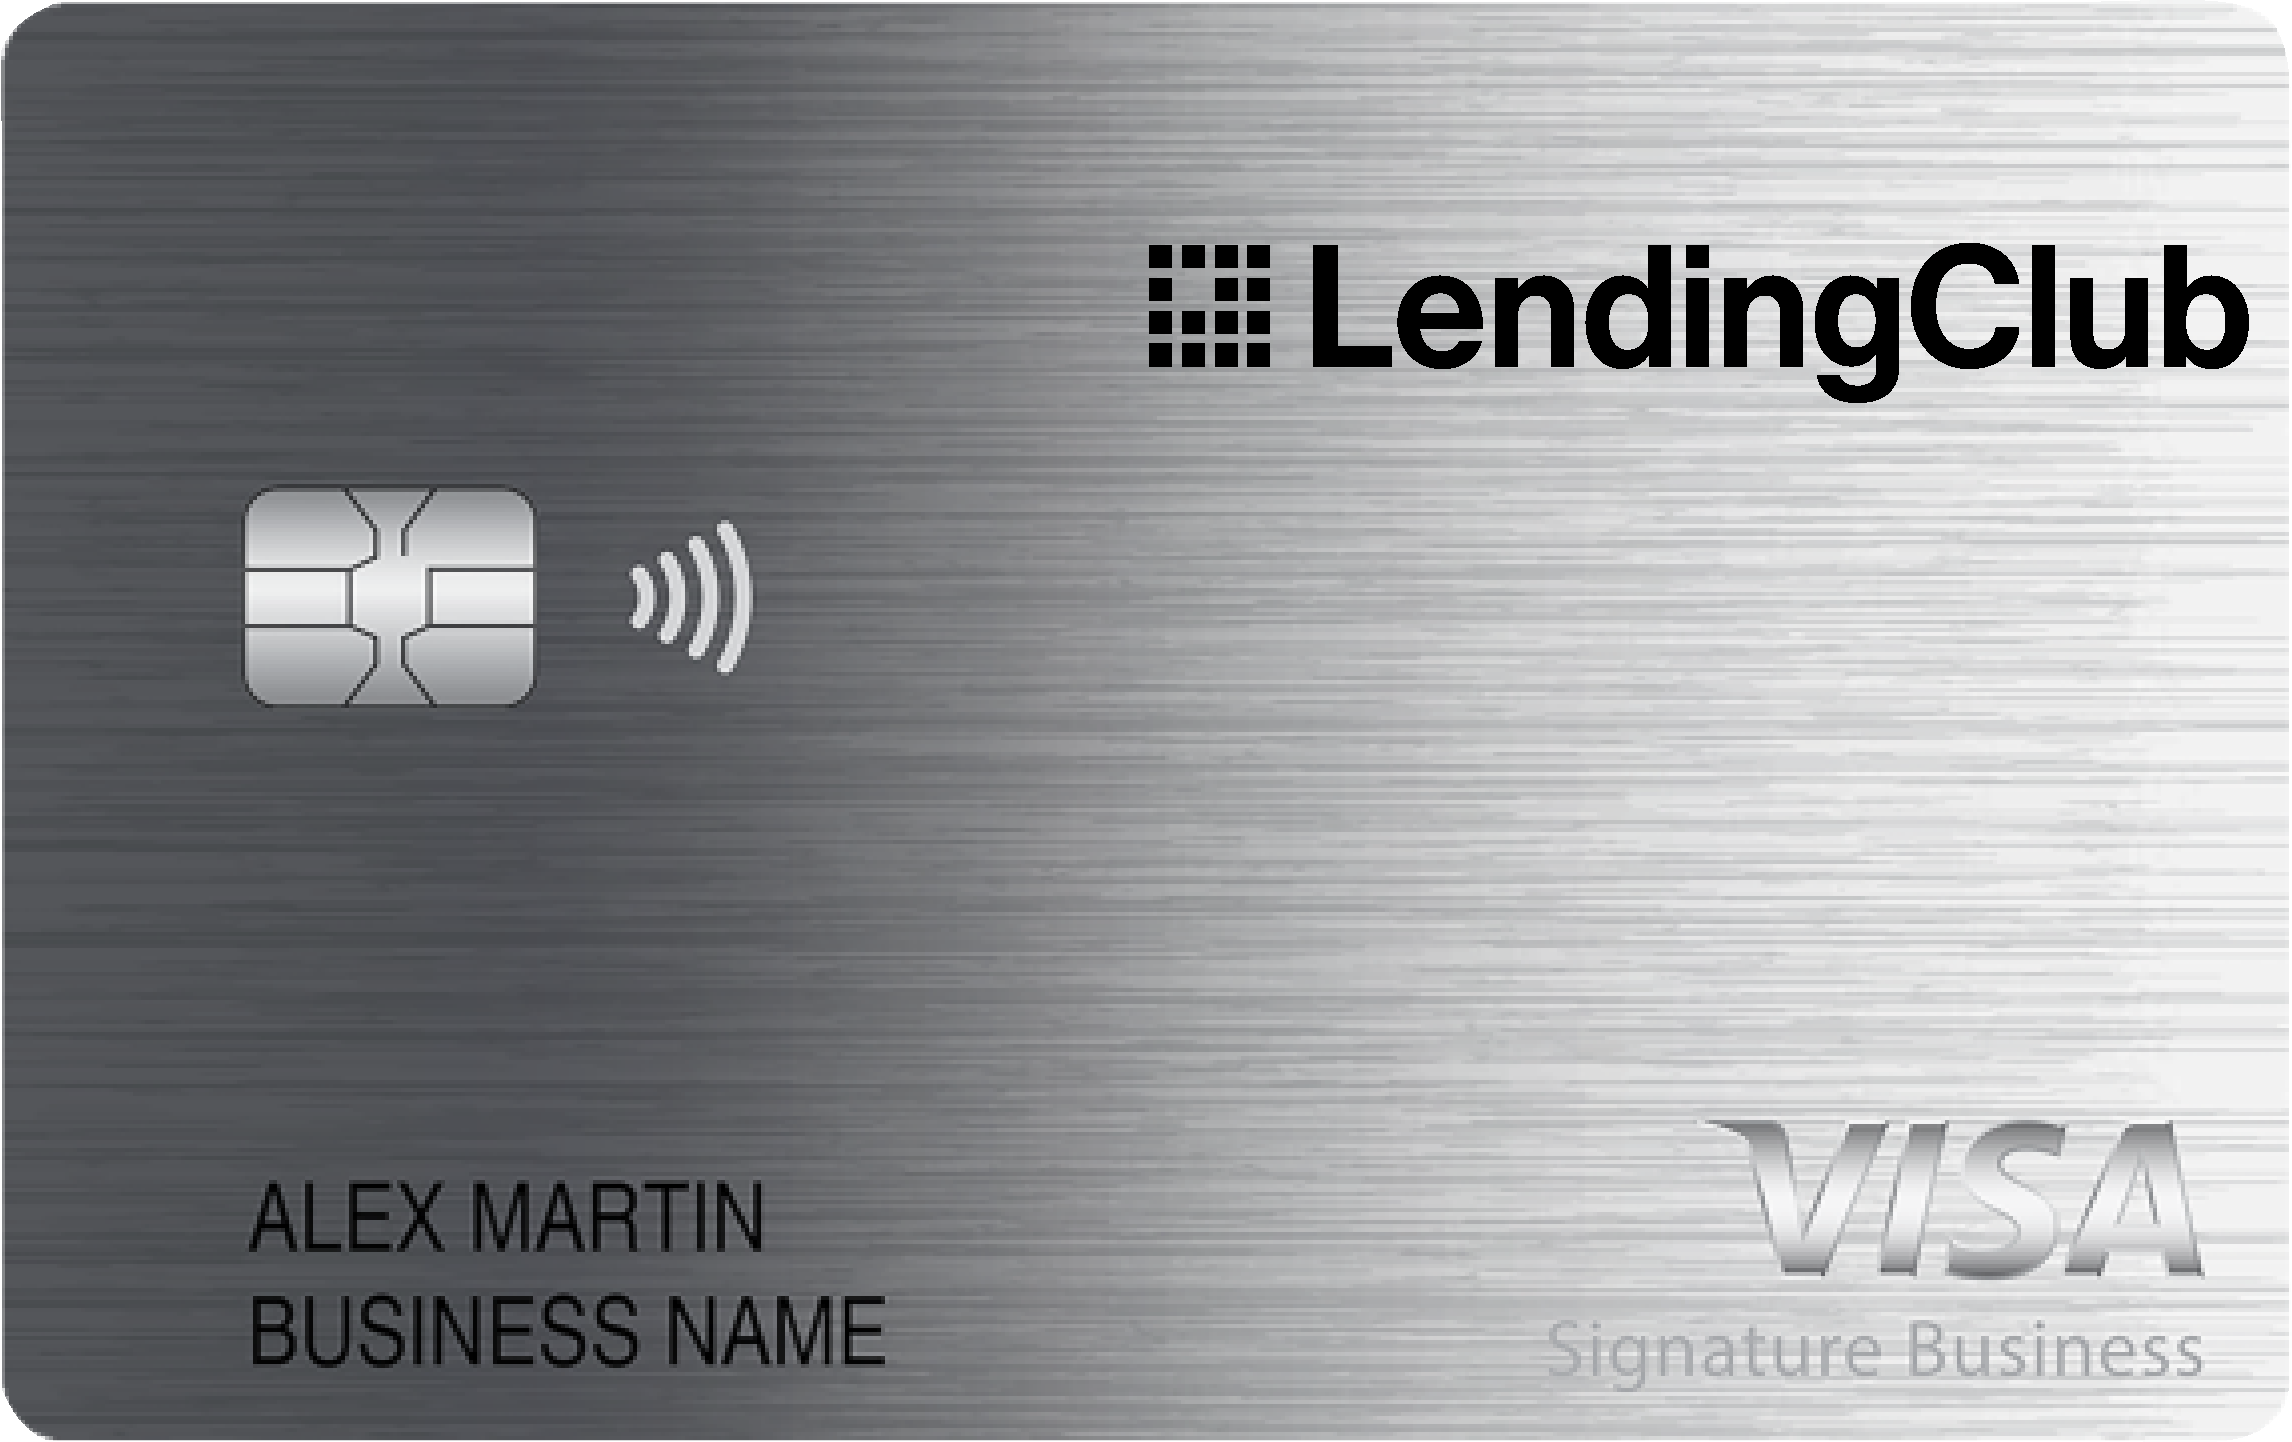 LendingClub Bank Smart Business Rewards Card